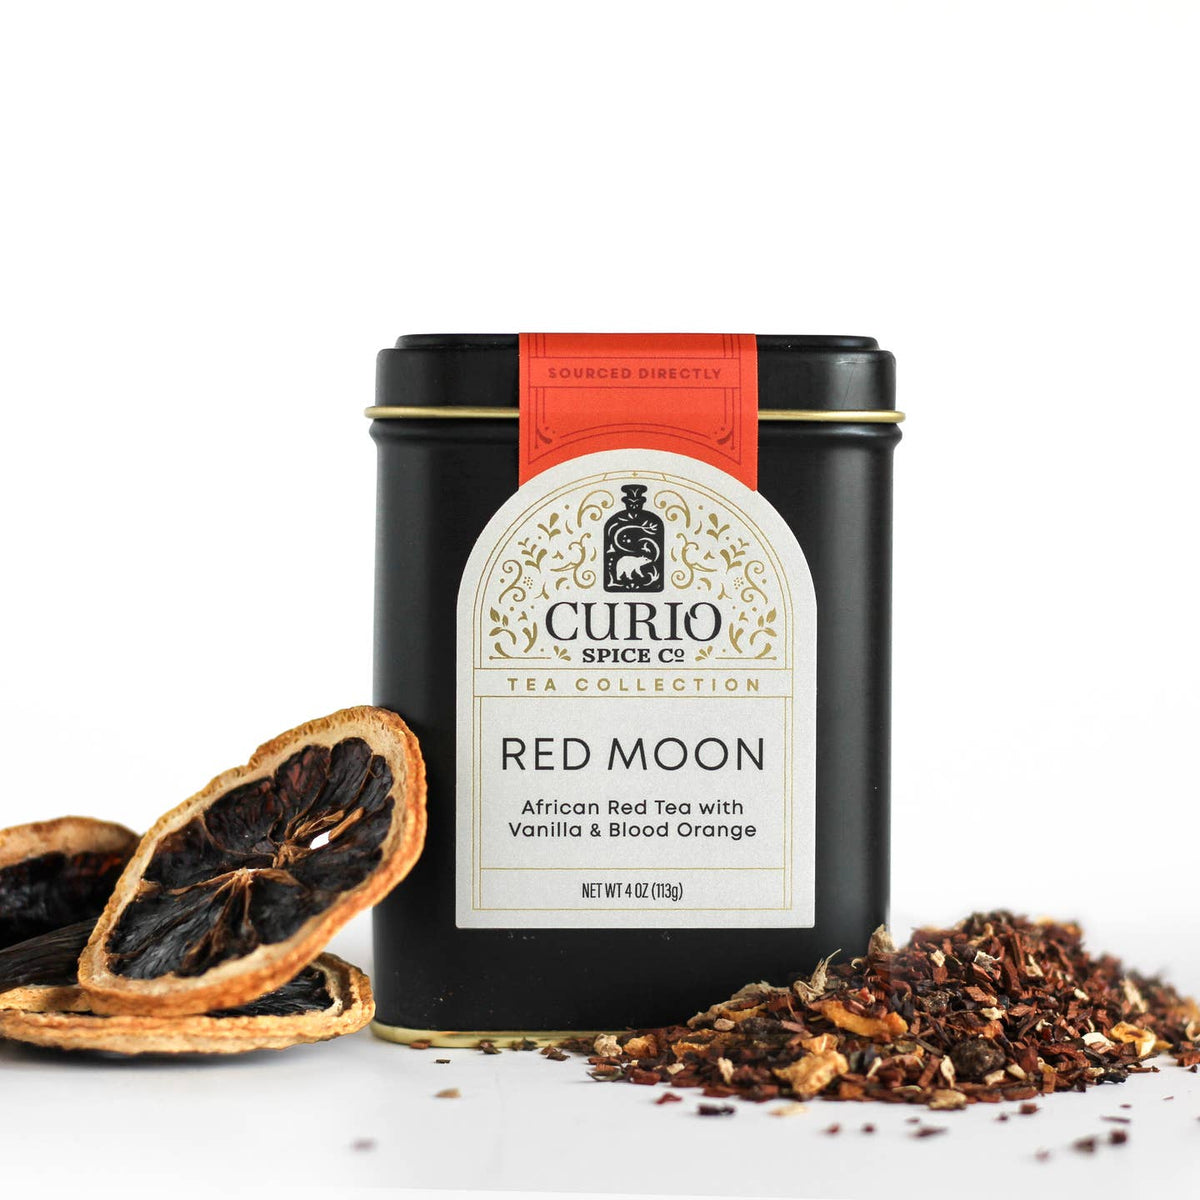 Curio Spice Co Red Moon Tea